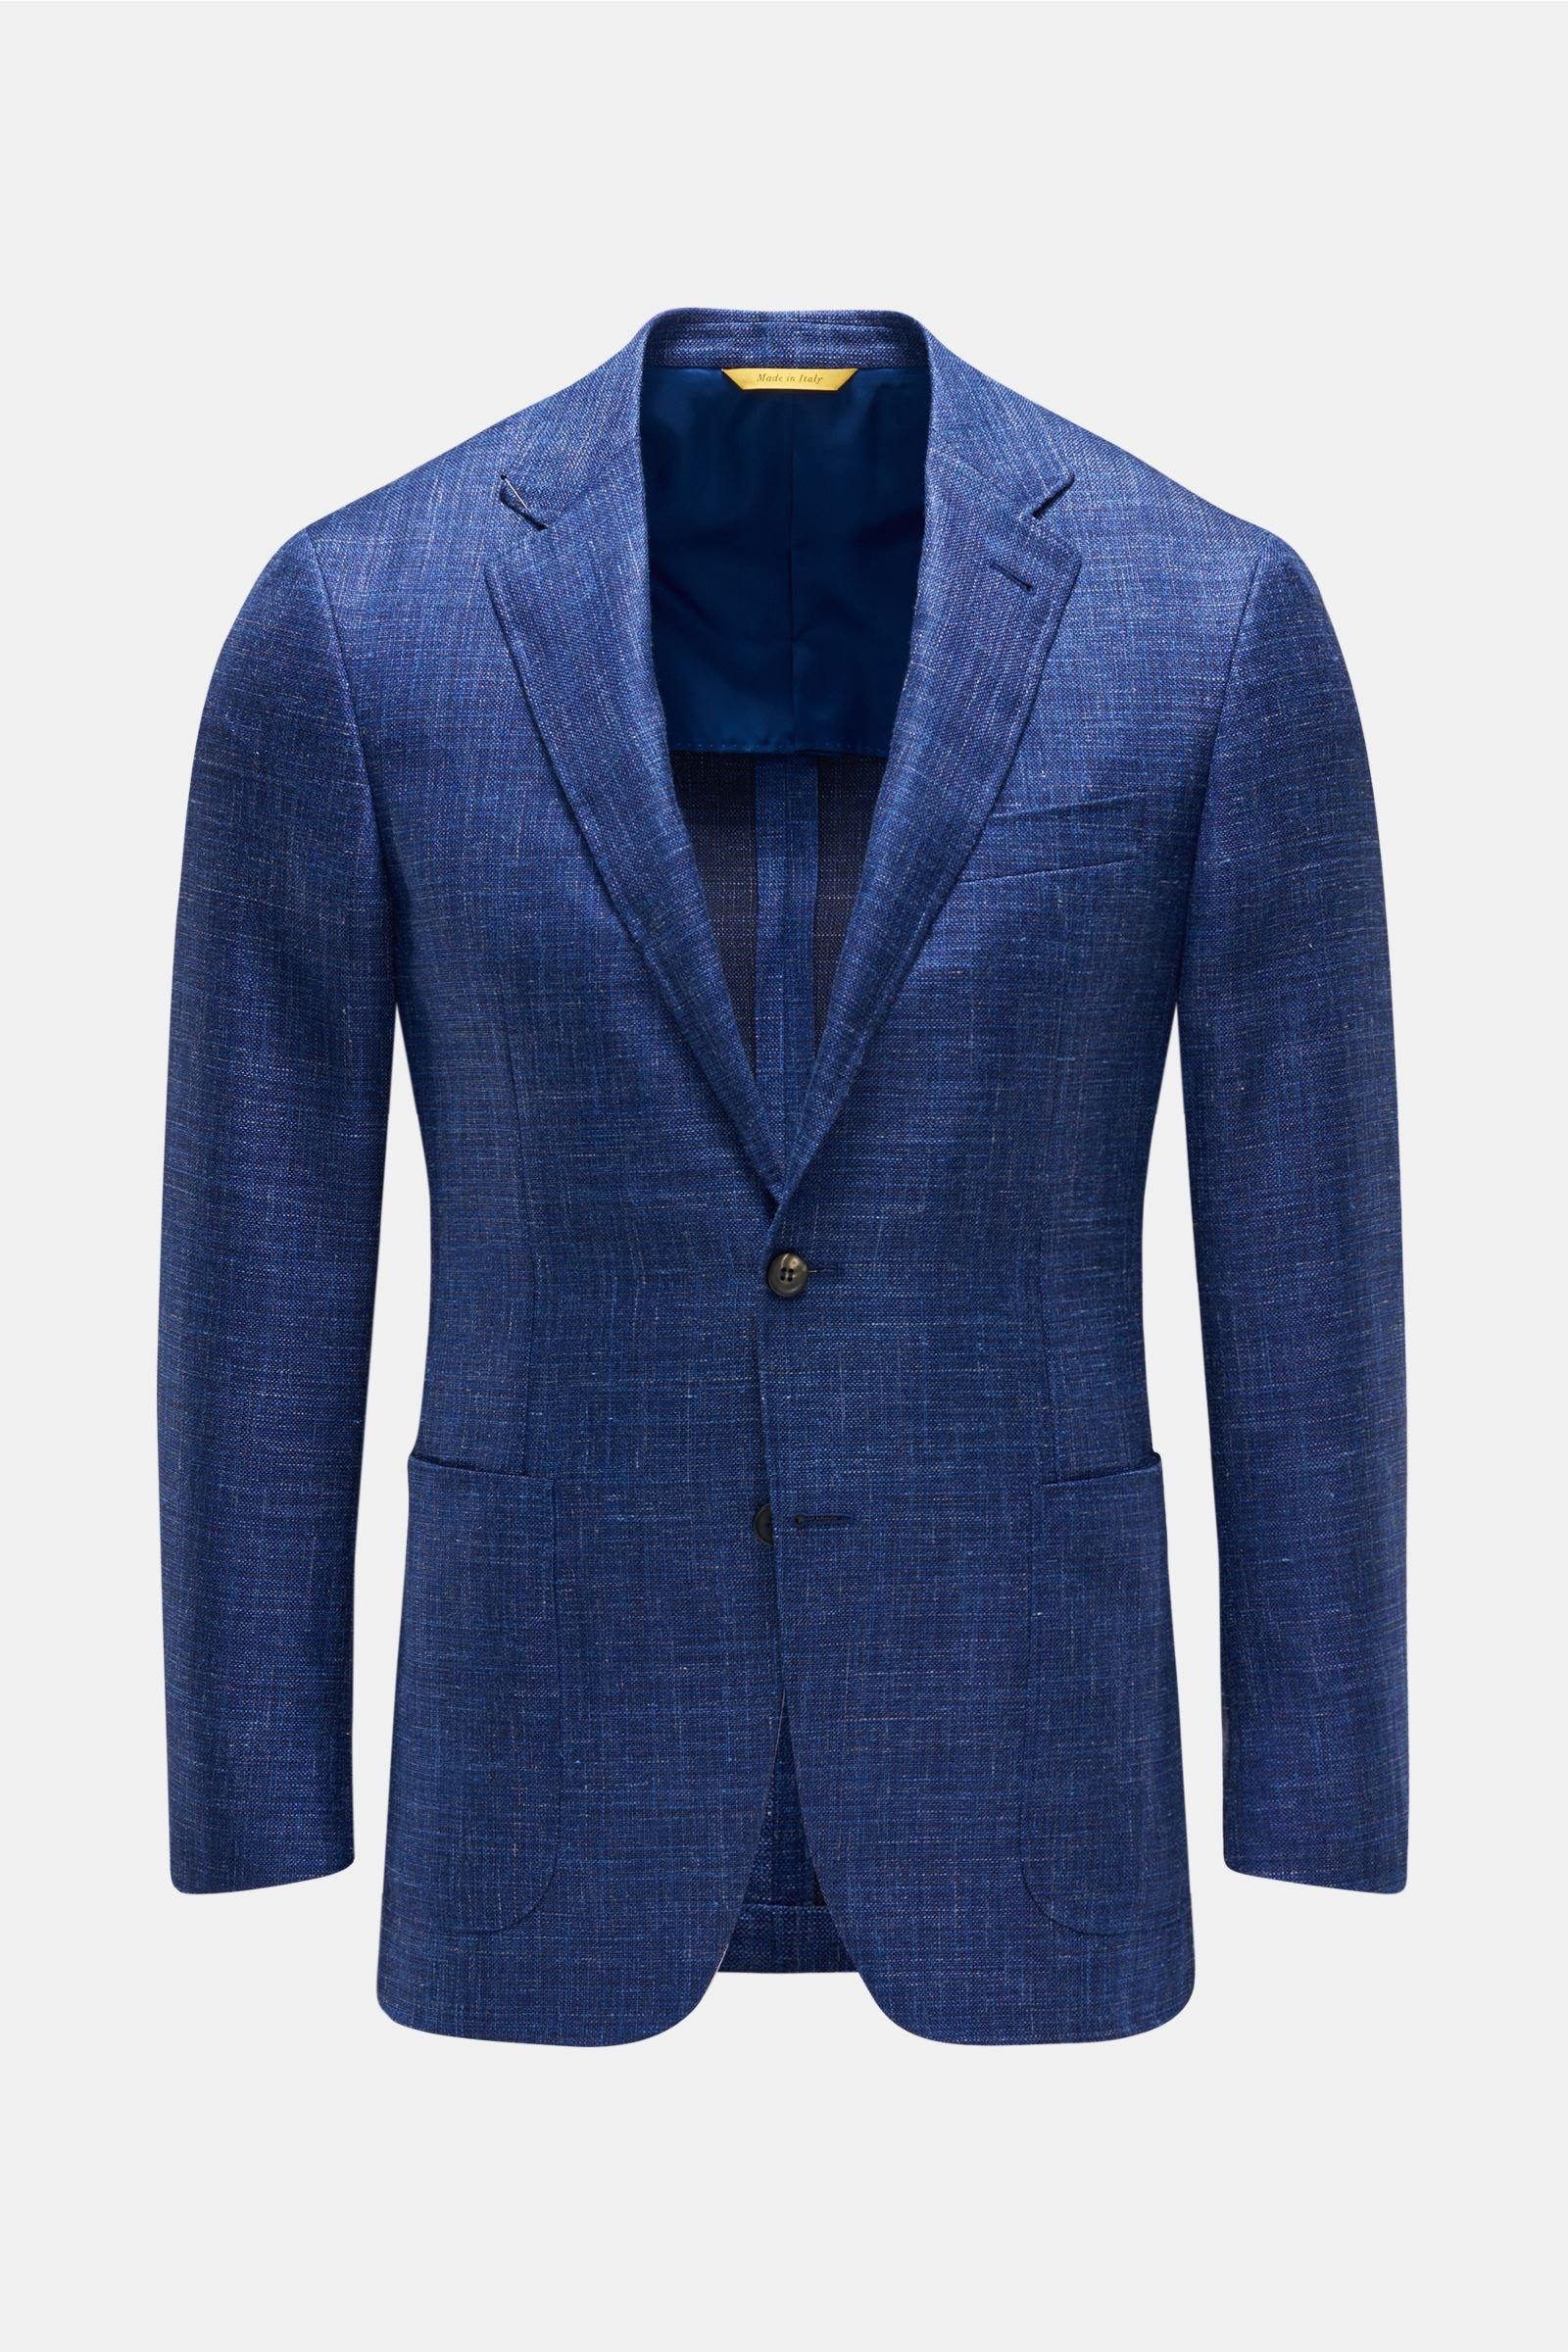 CANALI smart-casual jacket 'Kei' dark blue | BRAUN Hamburg